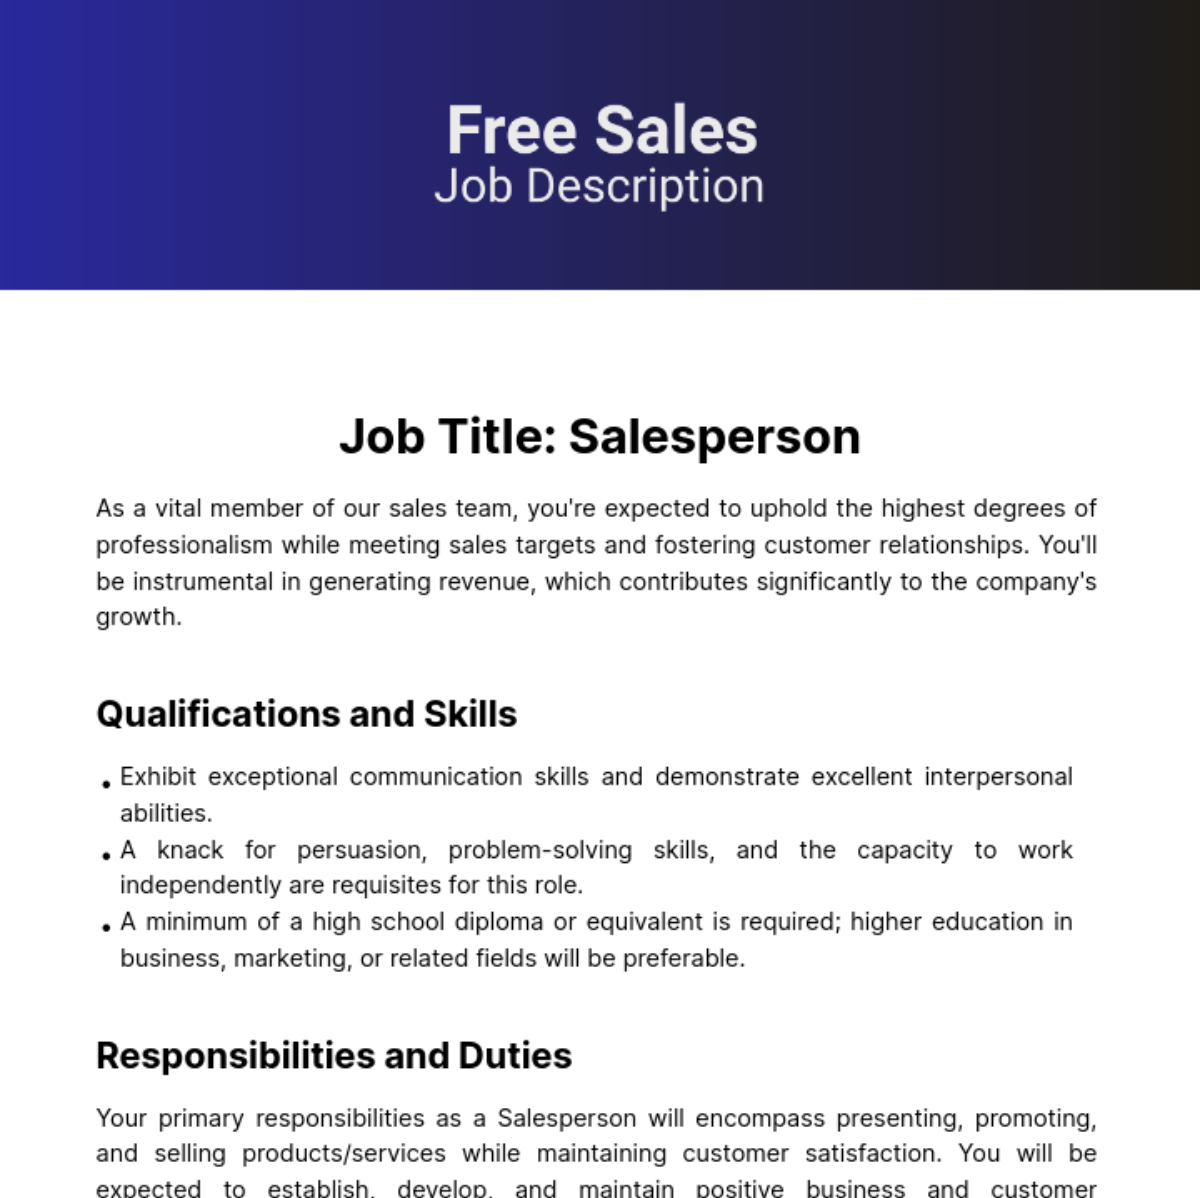 Free Sales Job Description Template